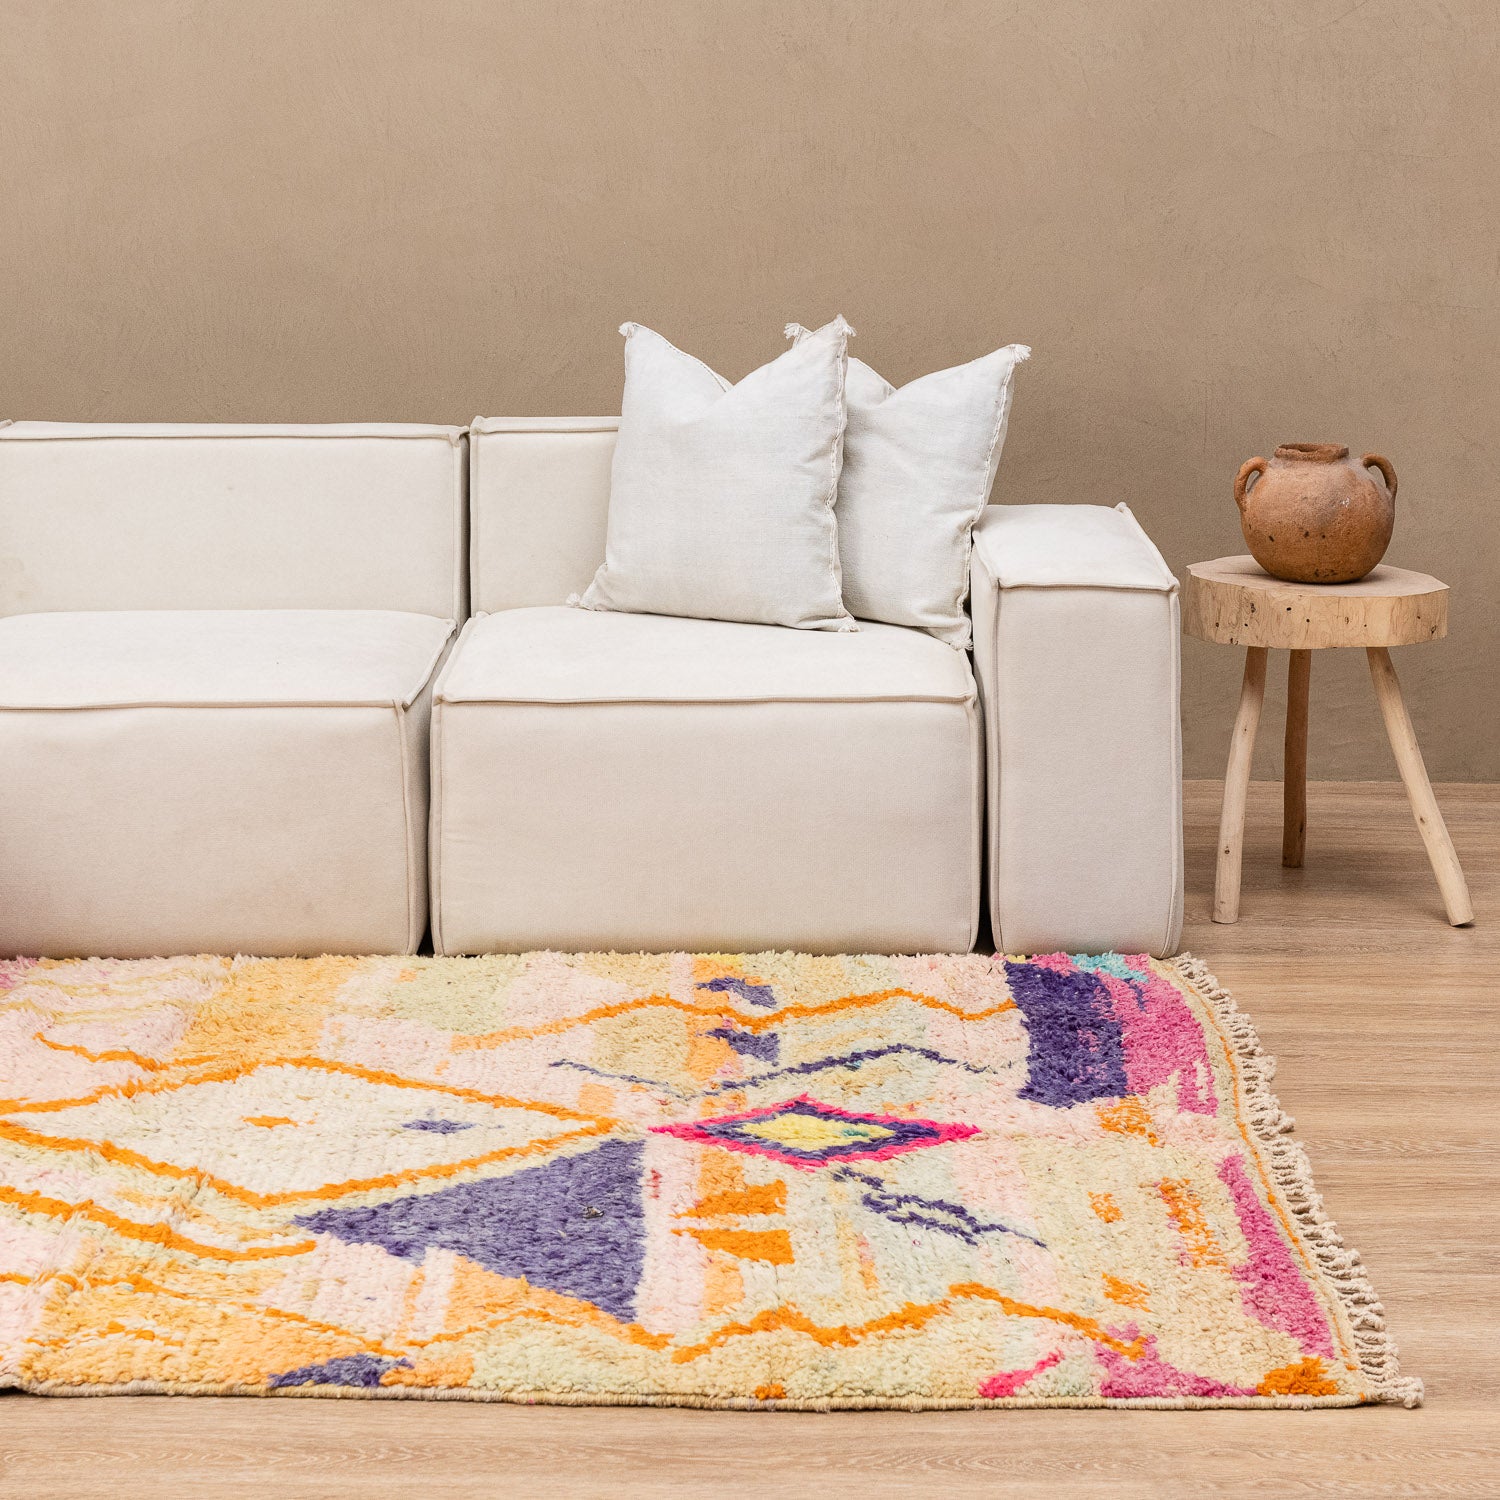 Kalthoum - Vintage Moroccan rug